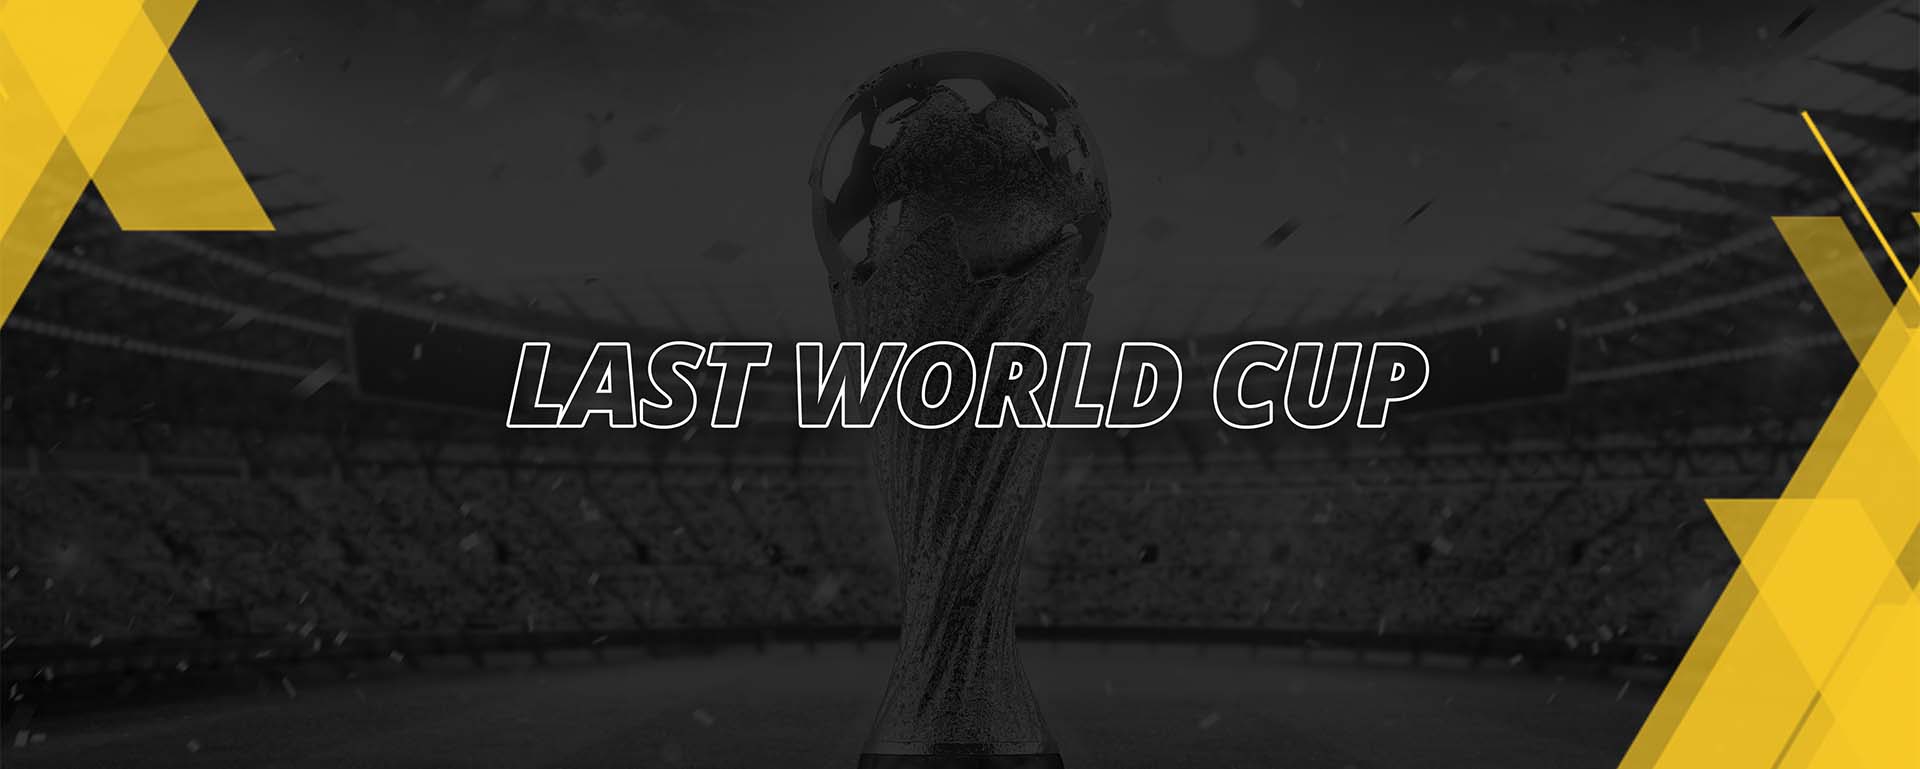 LAST WORLD CUP